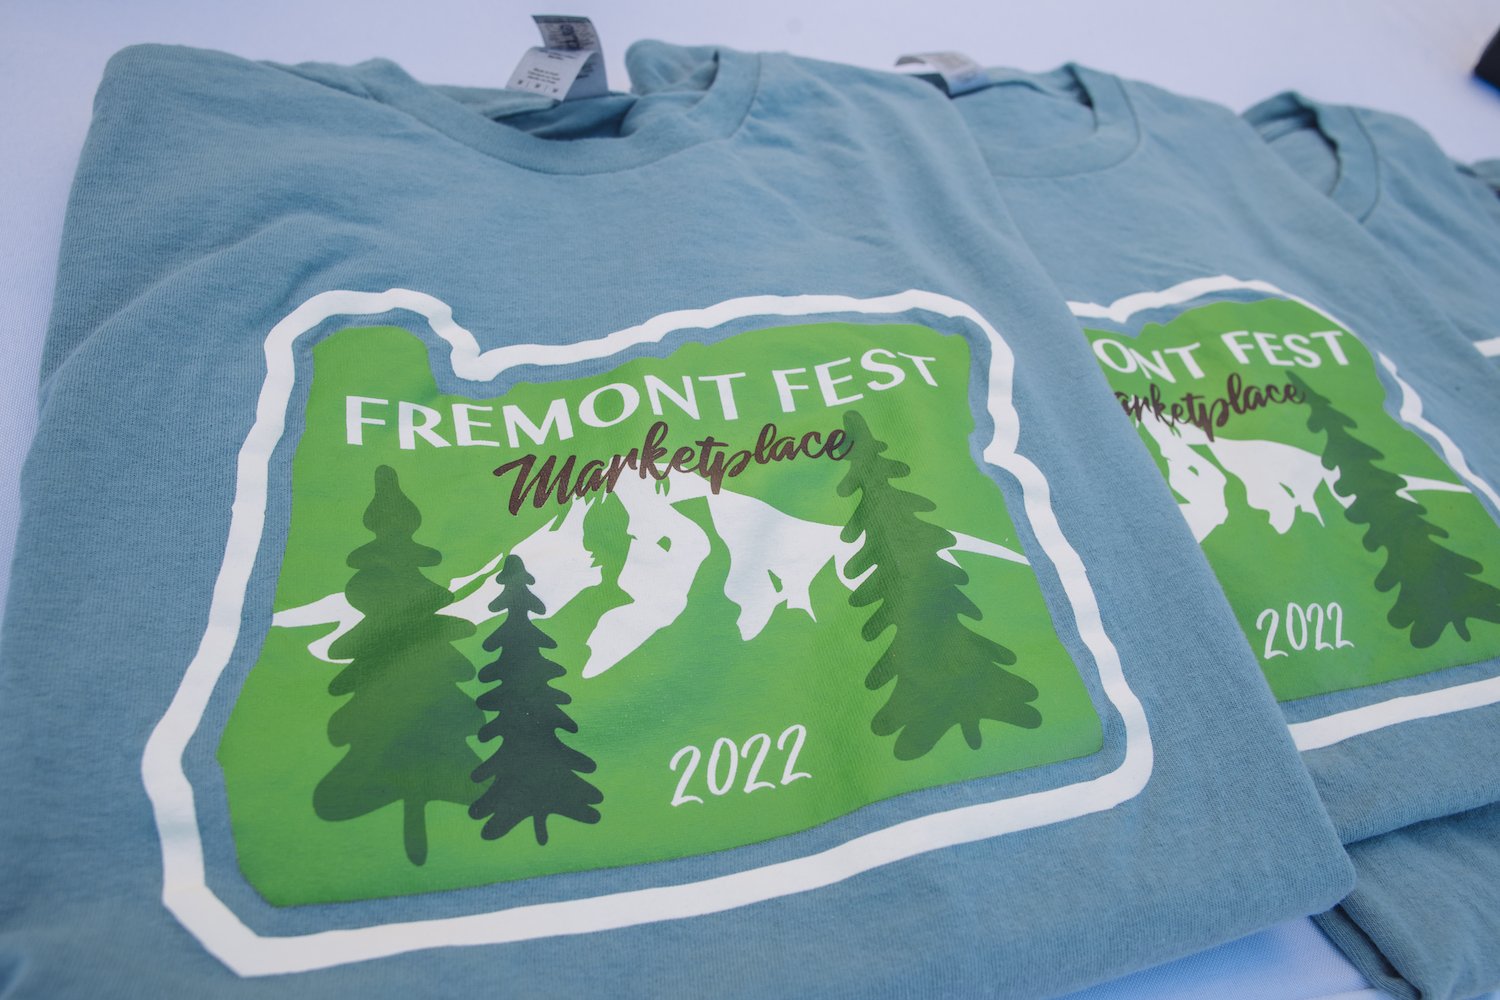 Fremont-Fest-shirts.jpg